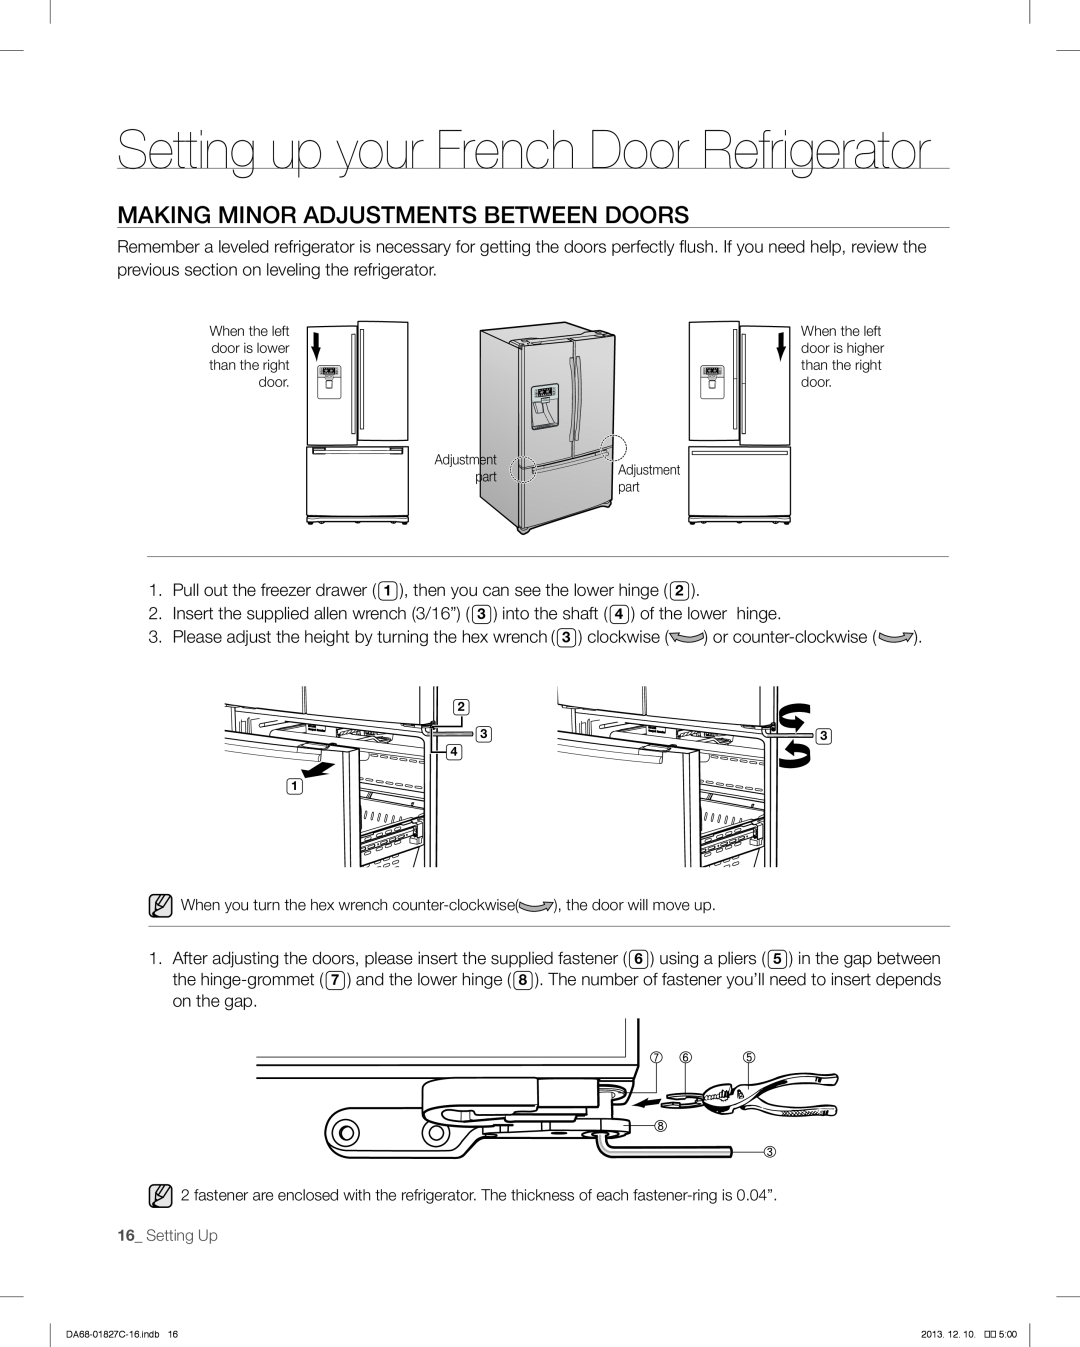 Samsung RFG237AARS Making Minor Adjustments Between Doors, Setting up your French Door Refrigerator, 16_ Setting Up 